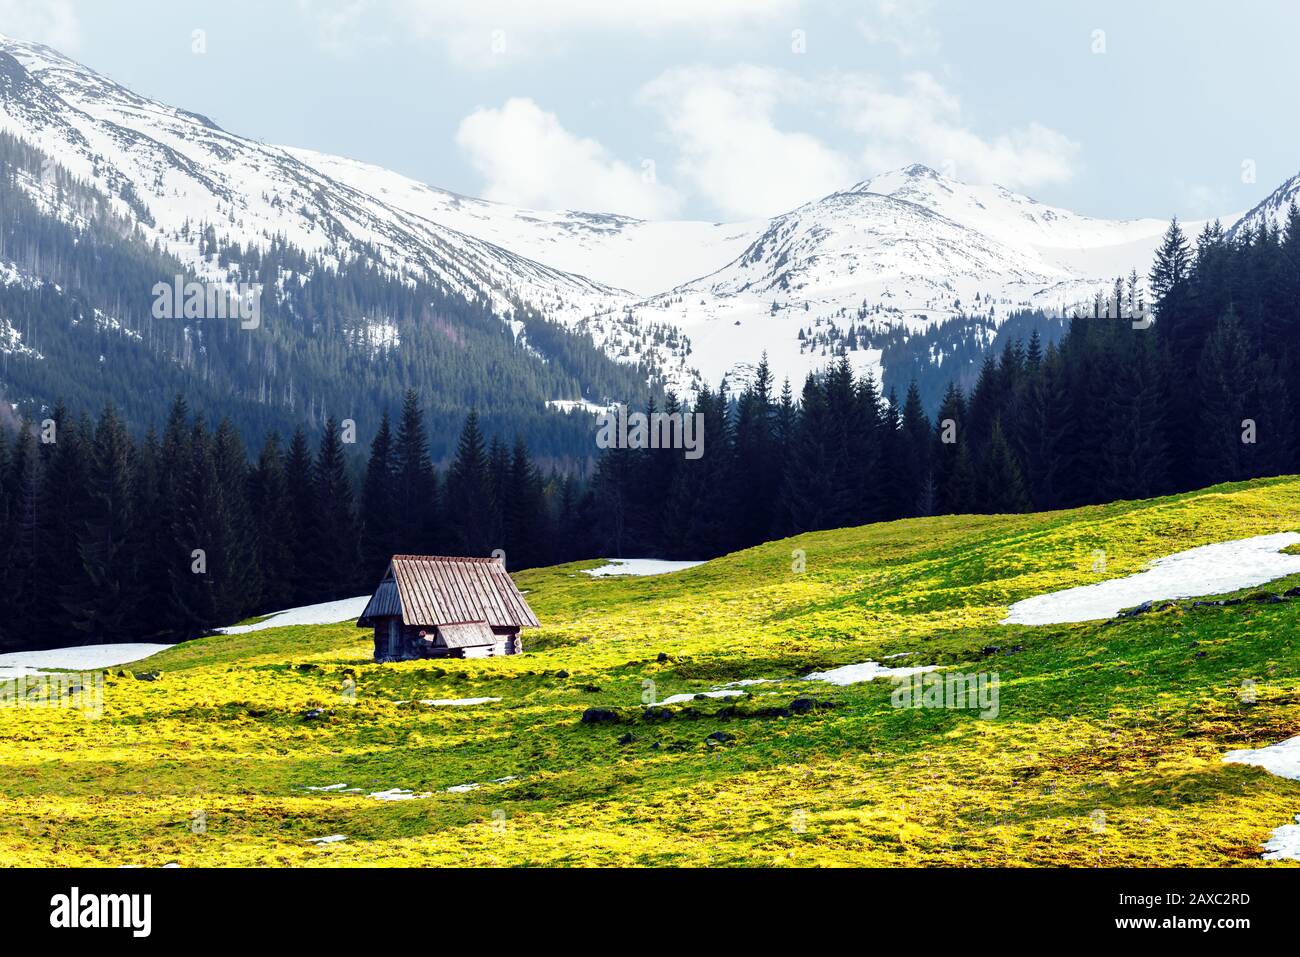 Antigua cabaña de madera en las montañas del Alto Tatras en la pradera de Kalatowki, Zakopane, Polonia. Fotografía de paisajes Foto de stock